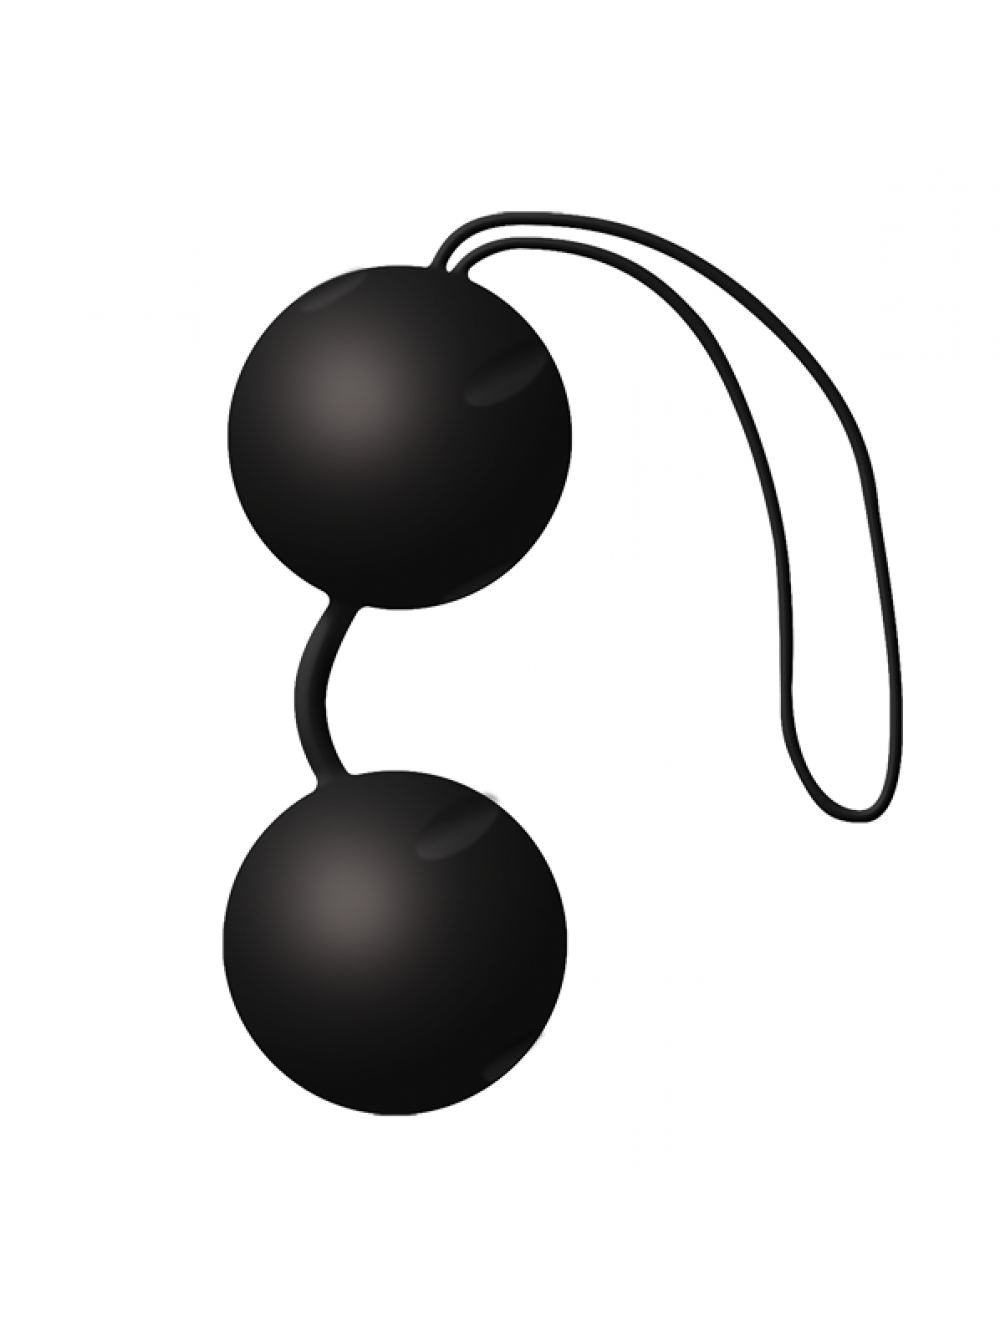 JOY DIVISION - Palline "Joyballs" Black in Puro Silicone 3,5 diametro